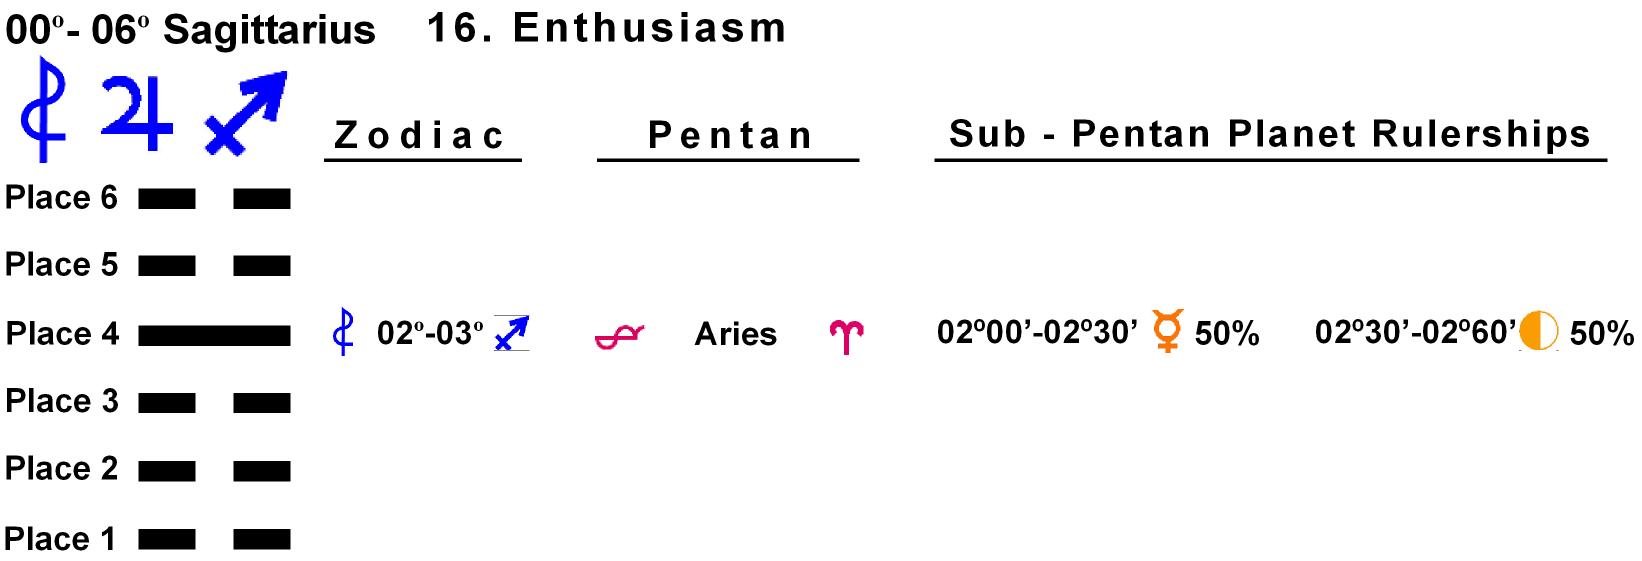 Pent-lines-09SA 02-03 Hx-16 Enthusiasm